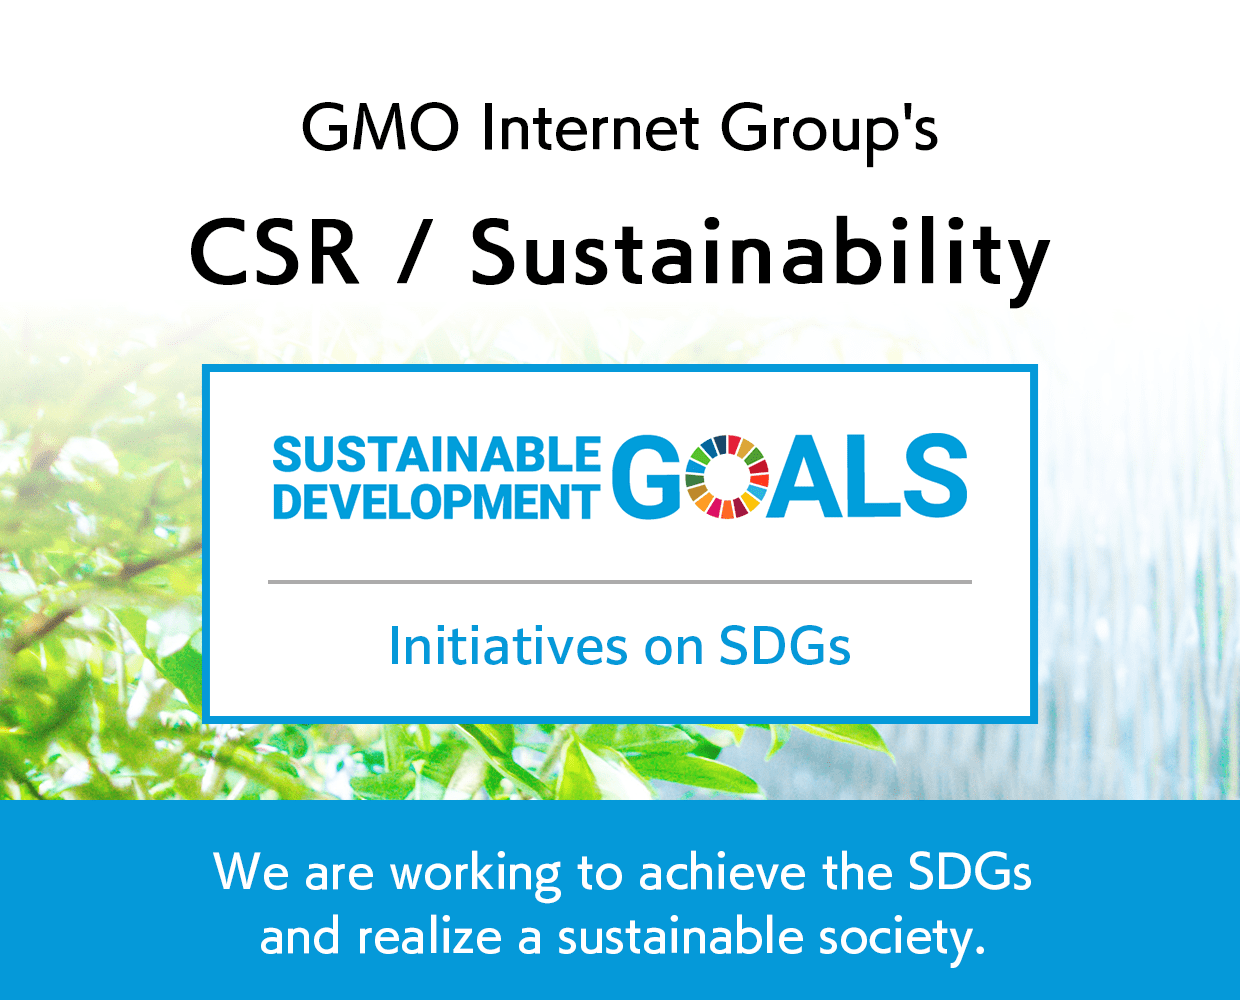 GMO Internet Group's CSR / Sustainability